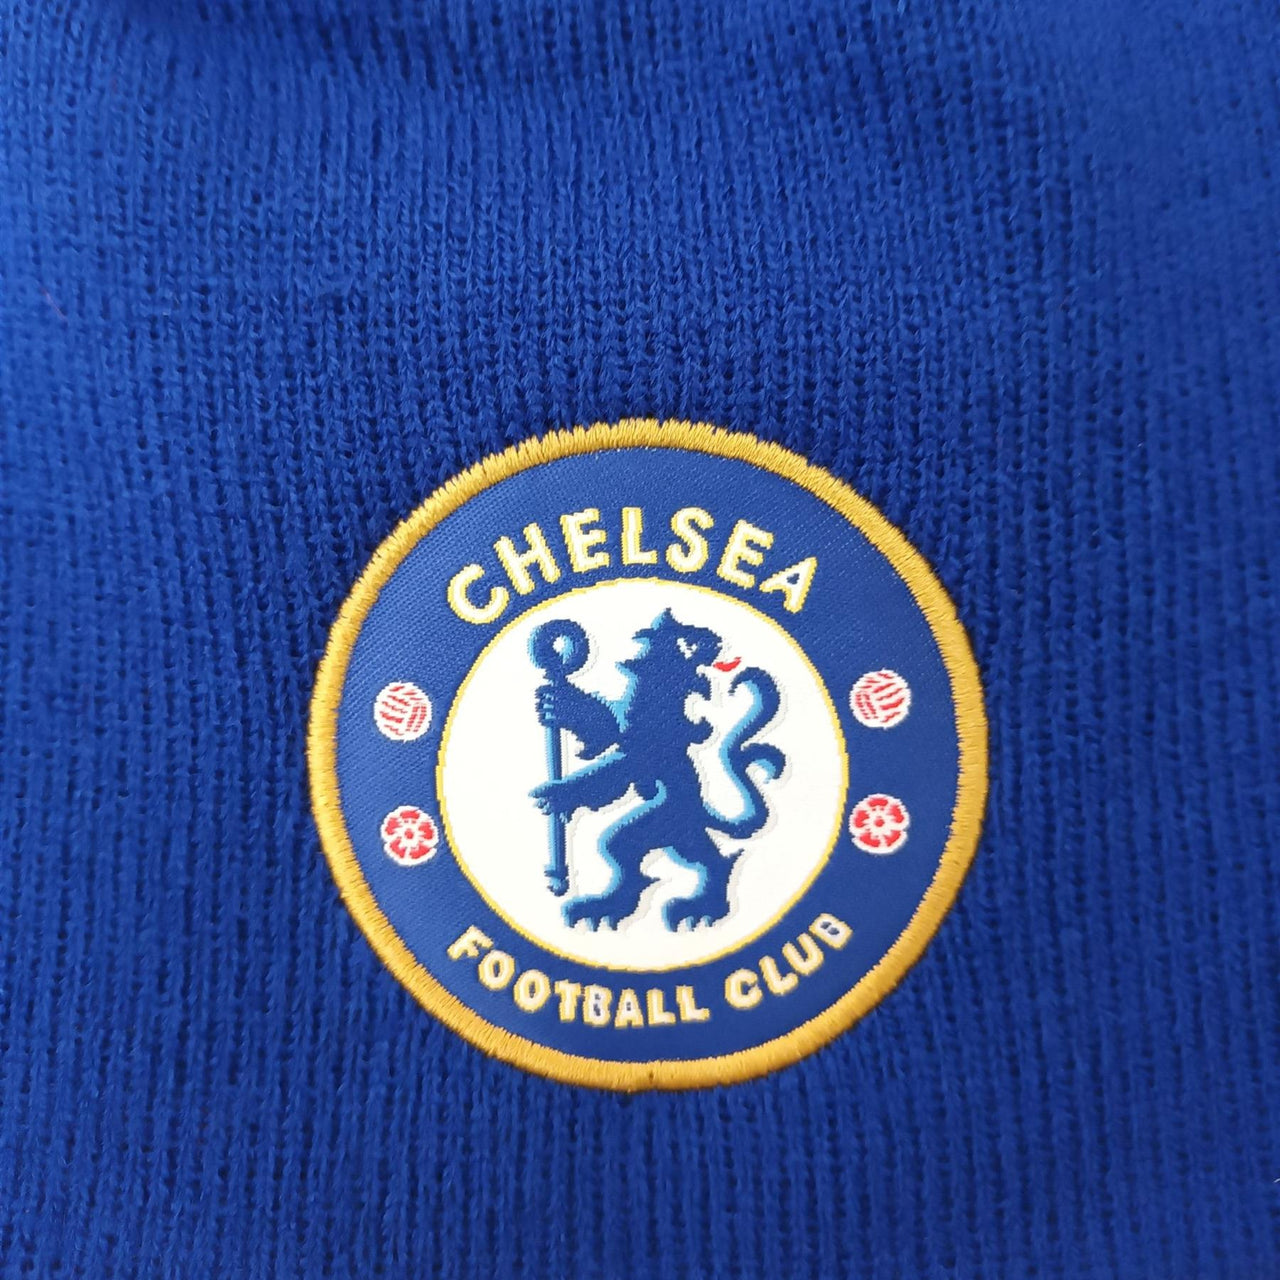 Chelsea FC Roll Down Beanie Hat | Royal